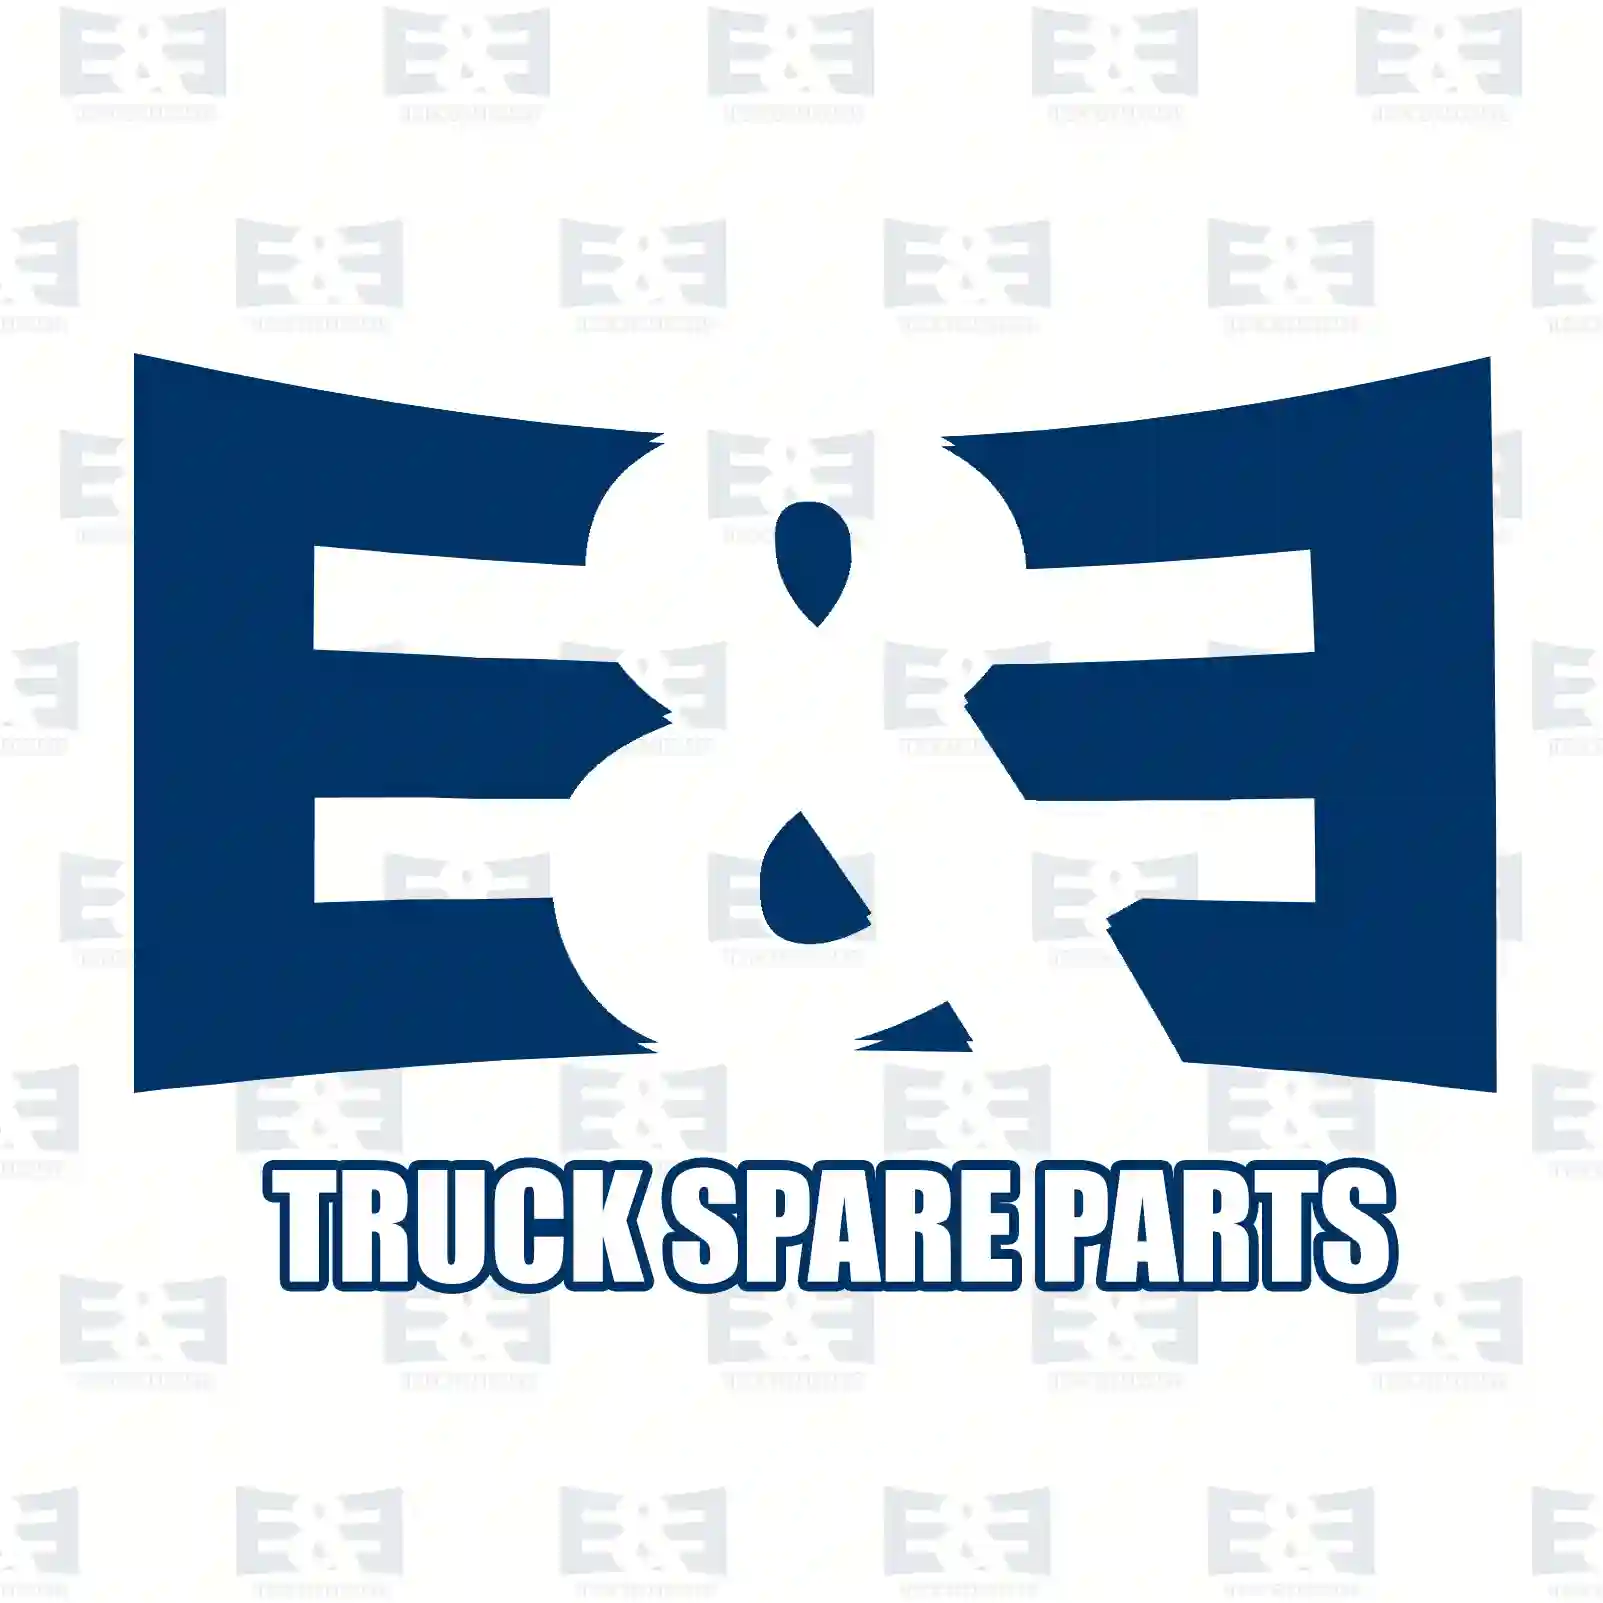  Belt tensioner, complete with v-belt || E&E Truck Spare Parts | Truck Spare Parts, Auotomotive Spare Parts